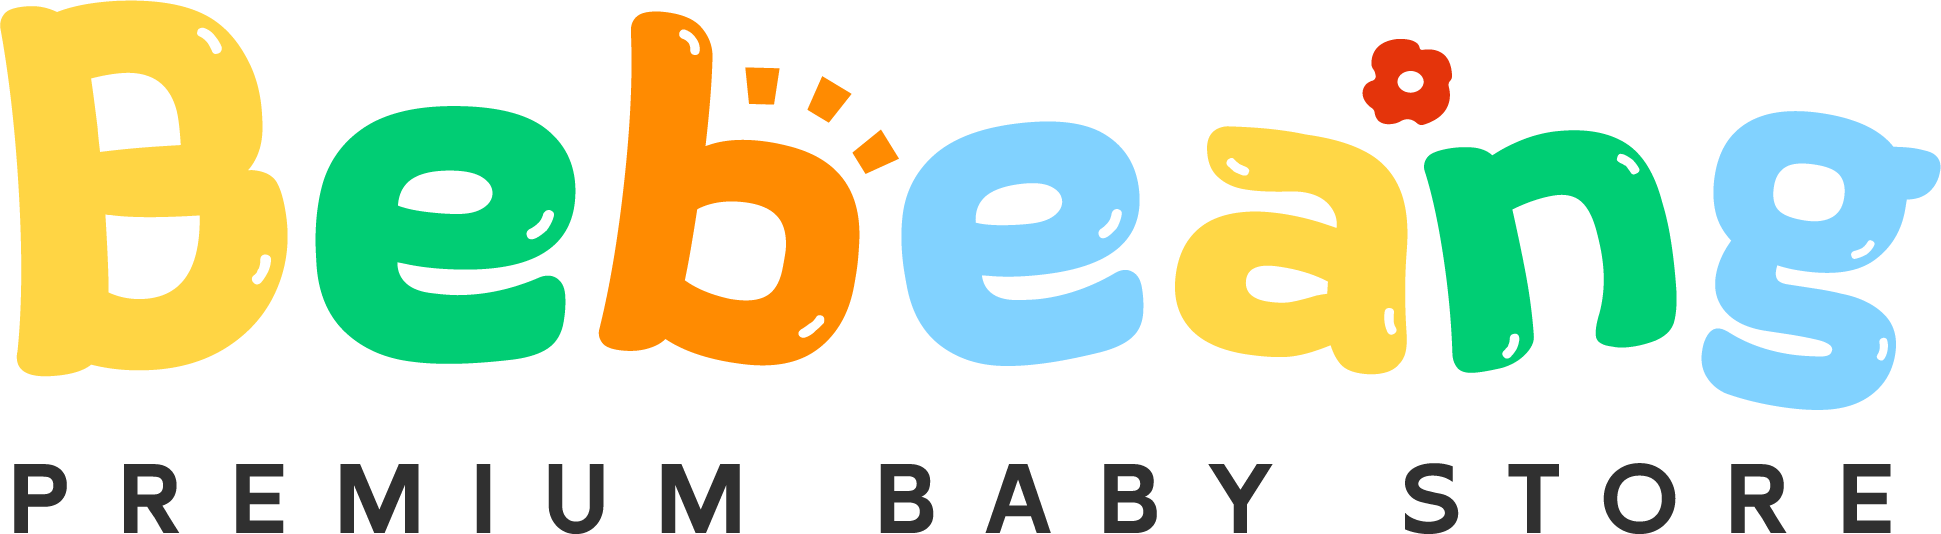 Bebeang Baby